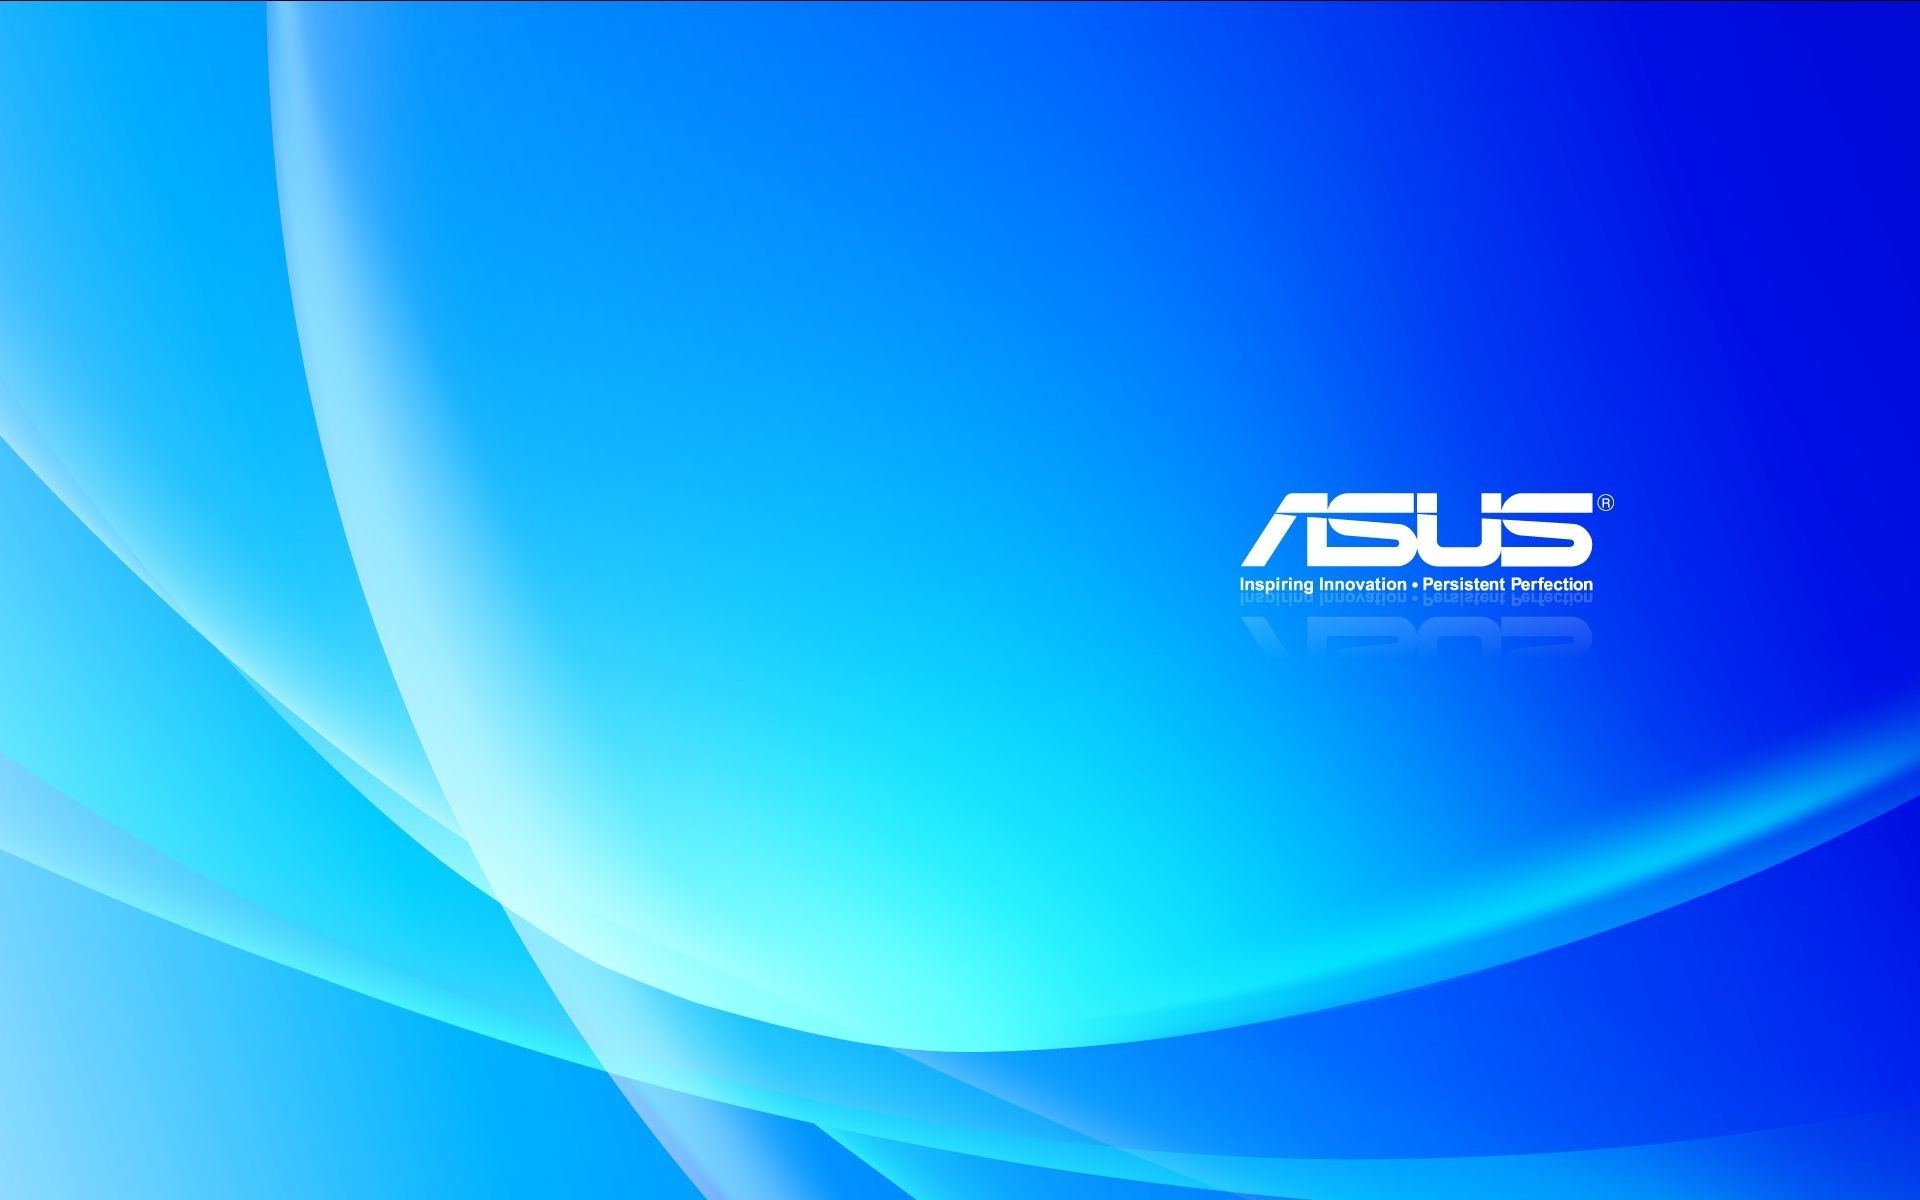 Asus Desktop Background